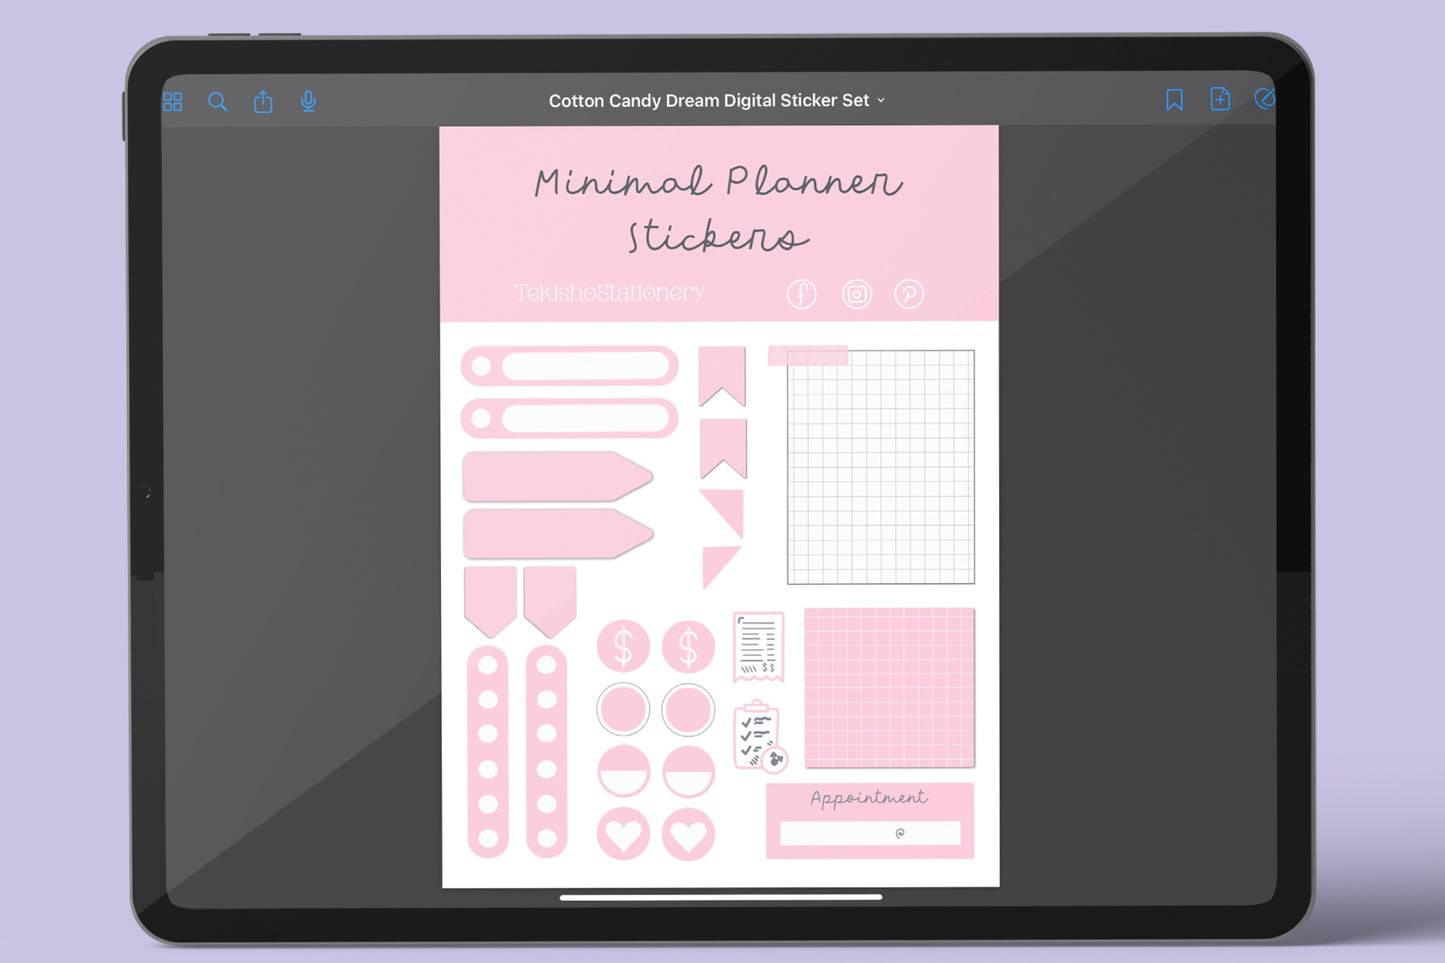 Minimal Digital Planner Precropped Sticker Sets - Cotton Candy Dream